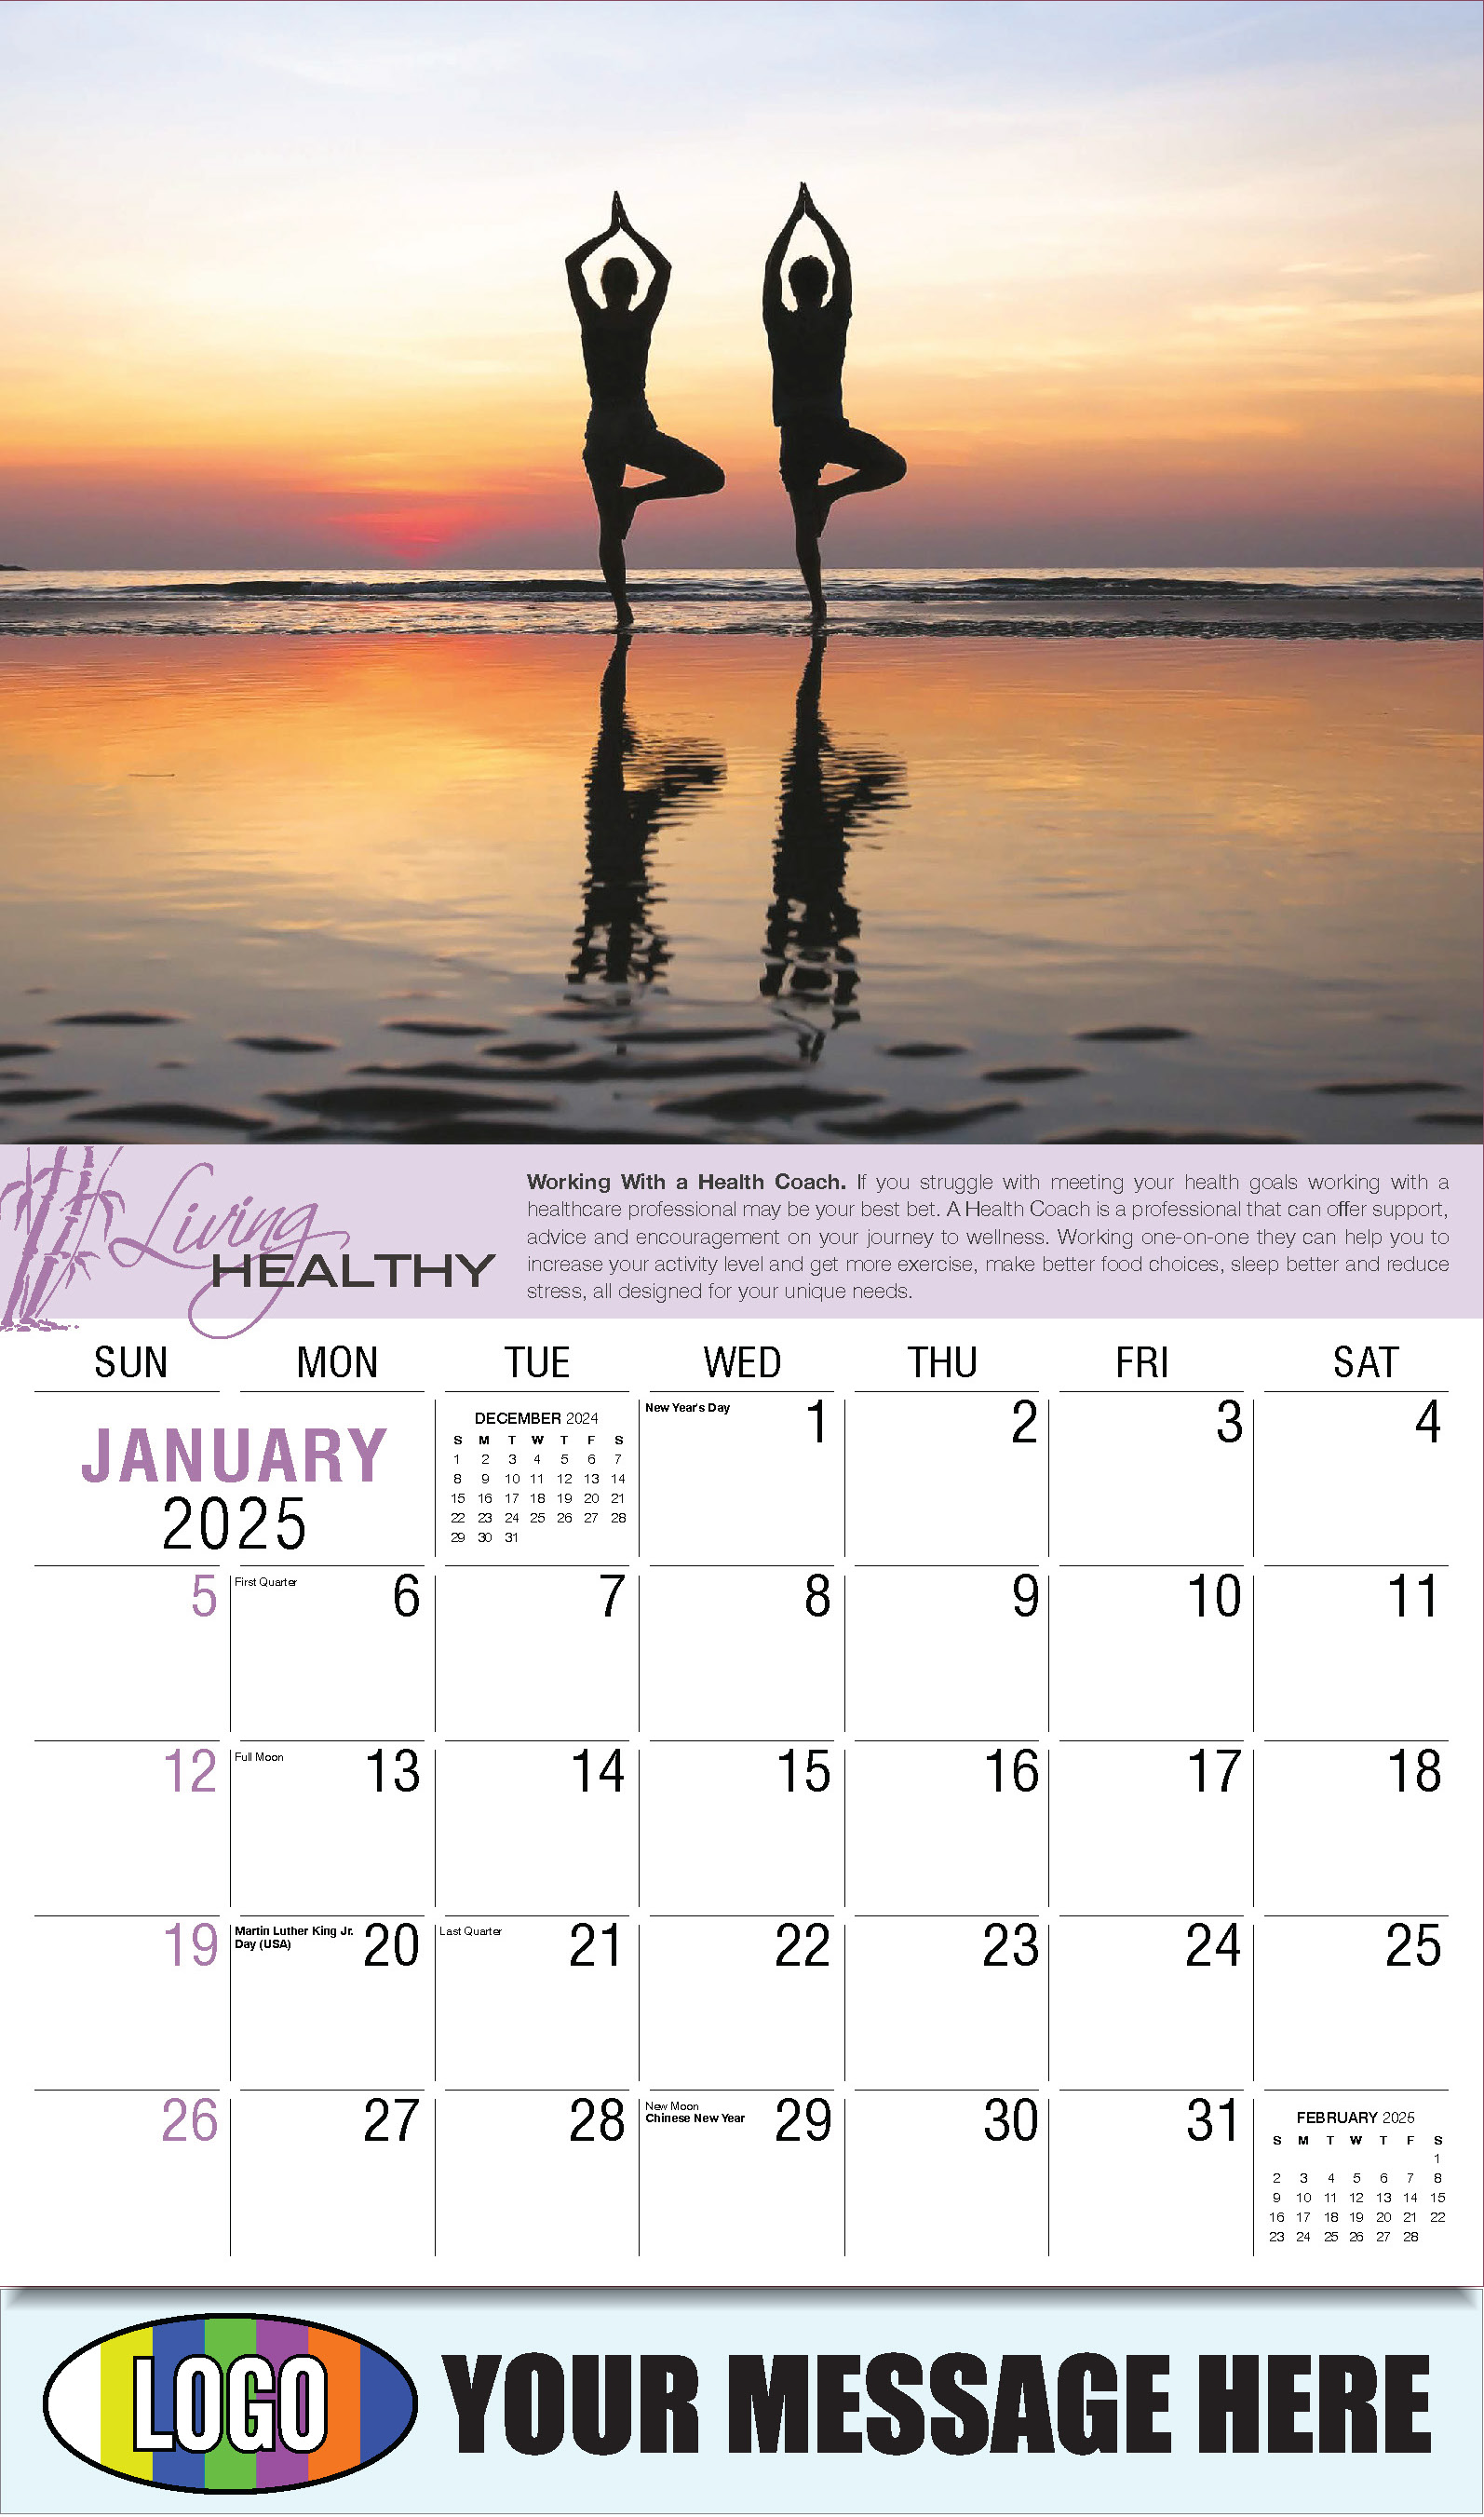 Living Healthy 2025 Business Promotional Calendar - January